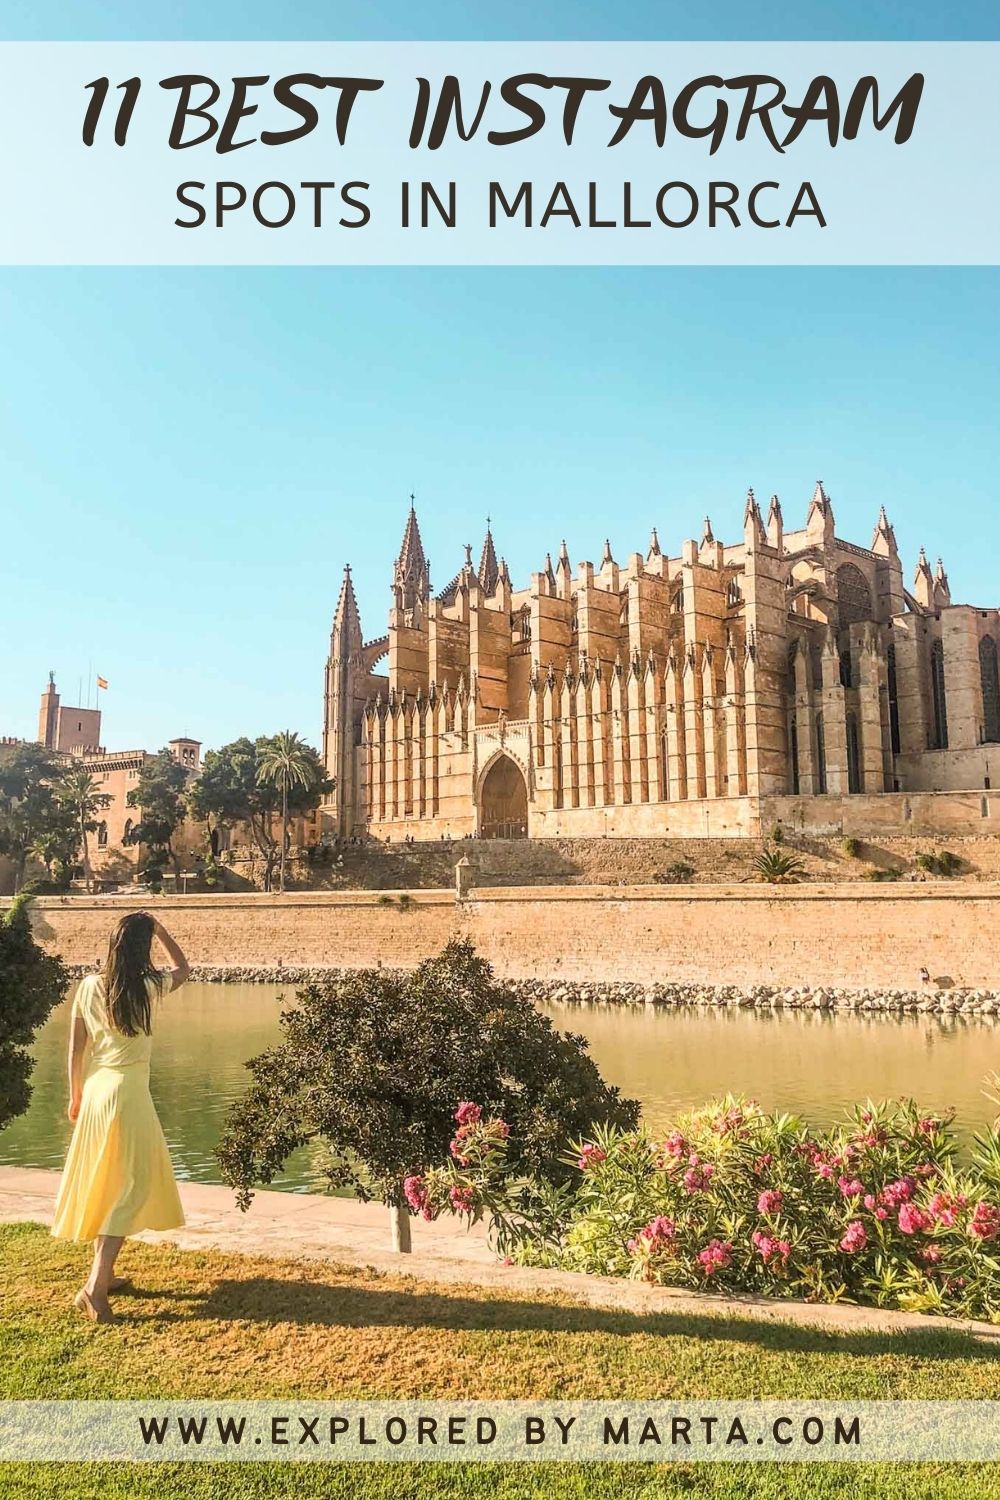 11 most famous Instagram spots in Mallorca